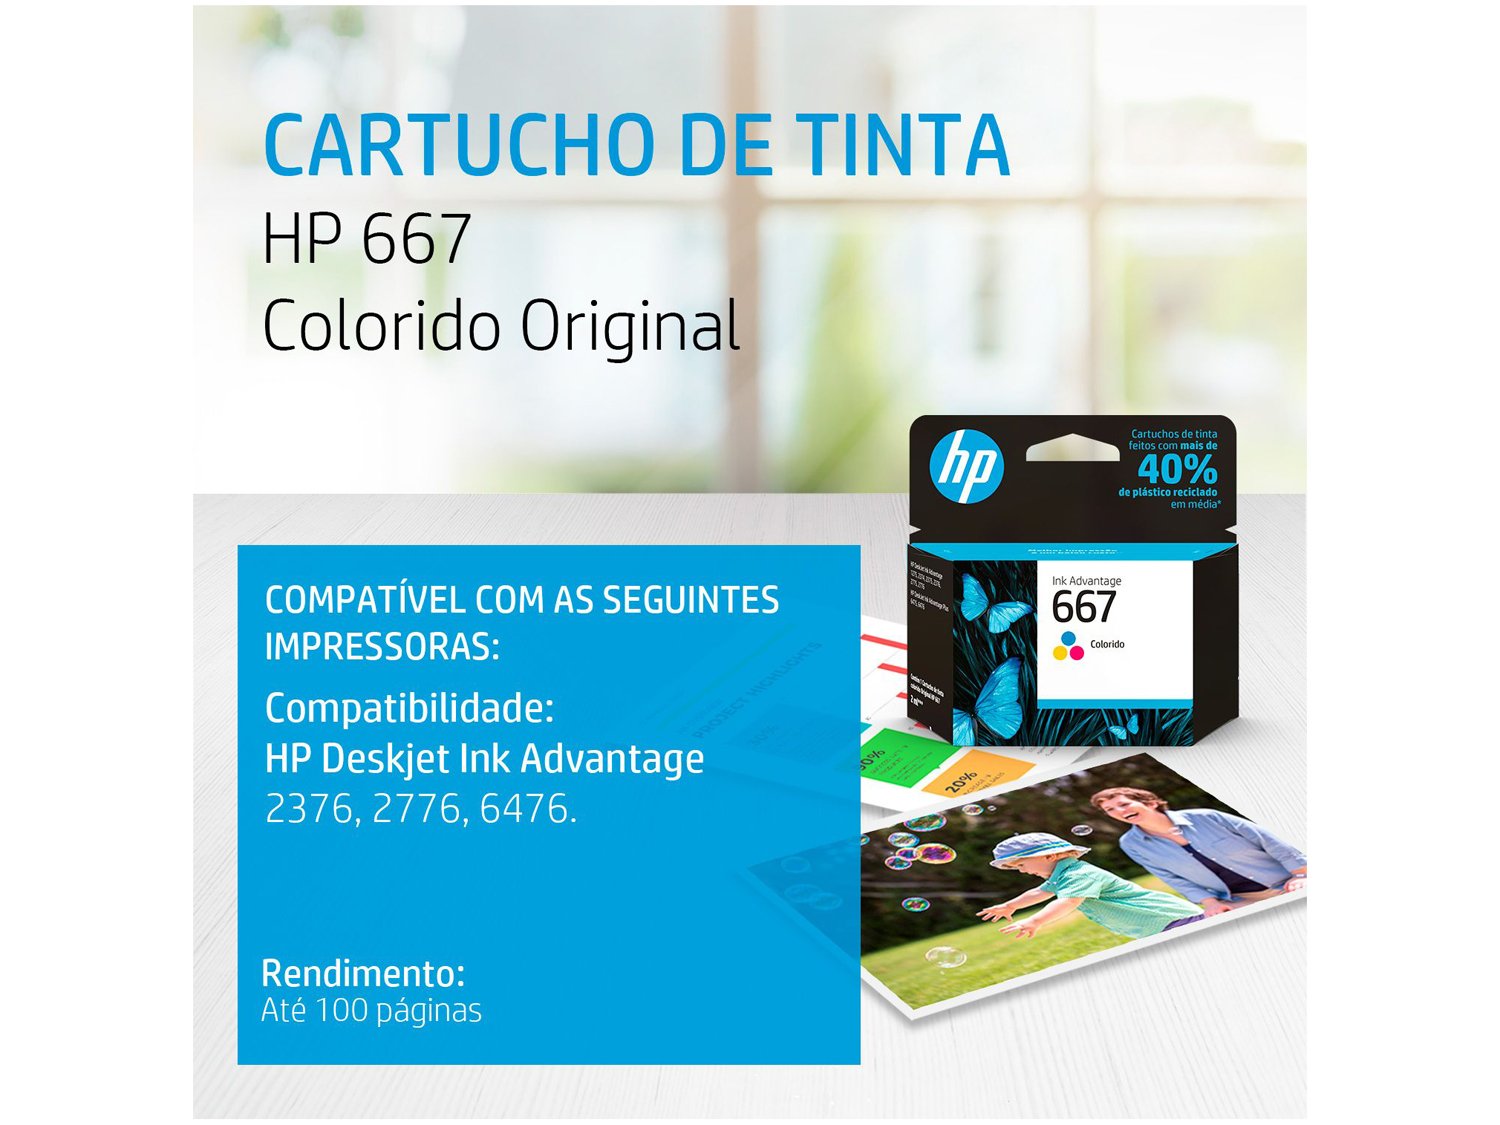 Cartucho de Tinta HP 667 Colorido Original - 1